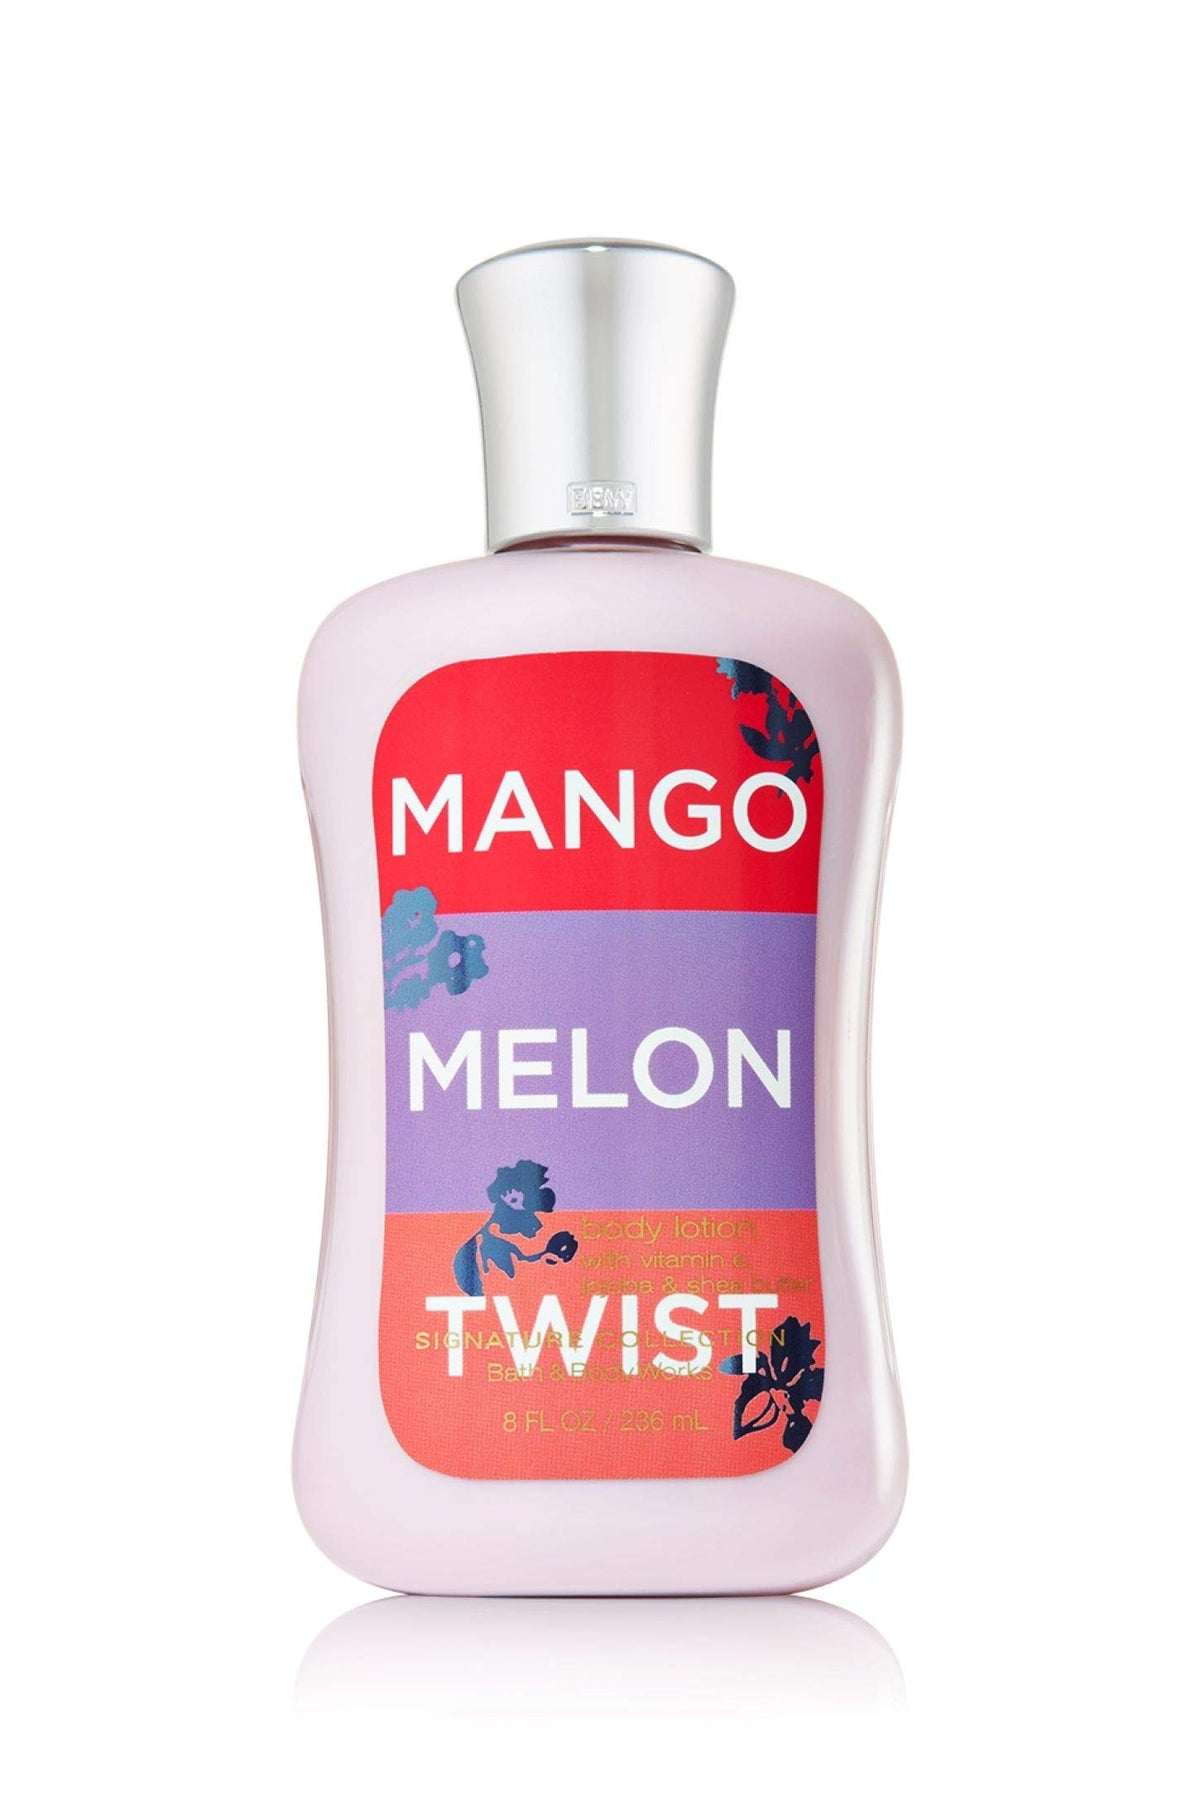 Mango Melon Twist Body Lotion 8 Fl Oz Bath and Body Works